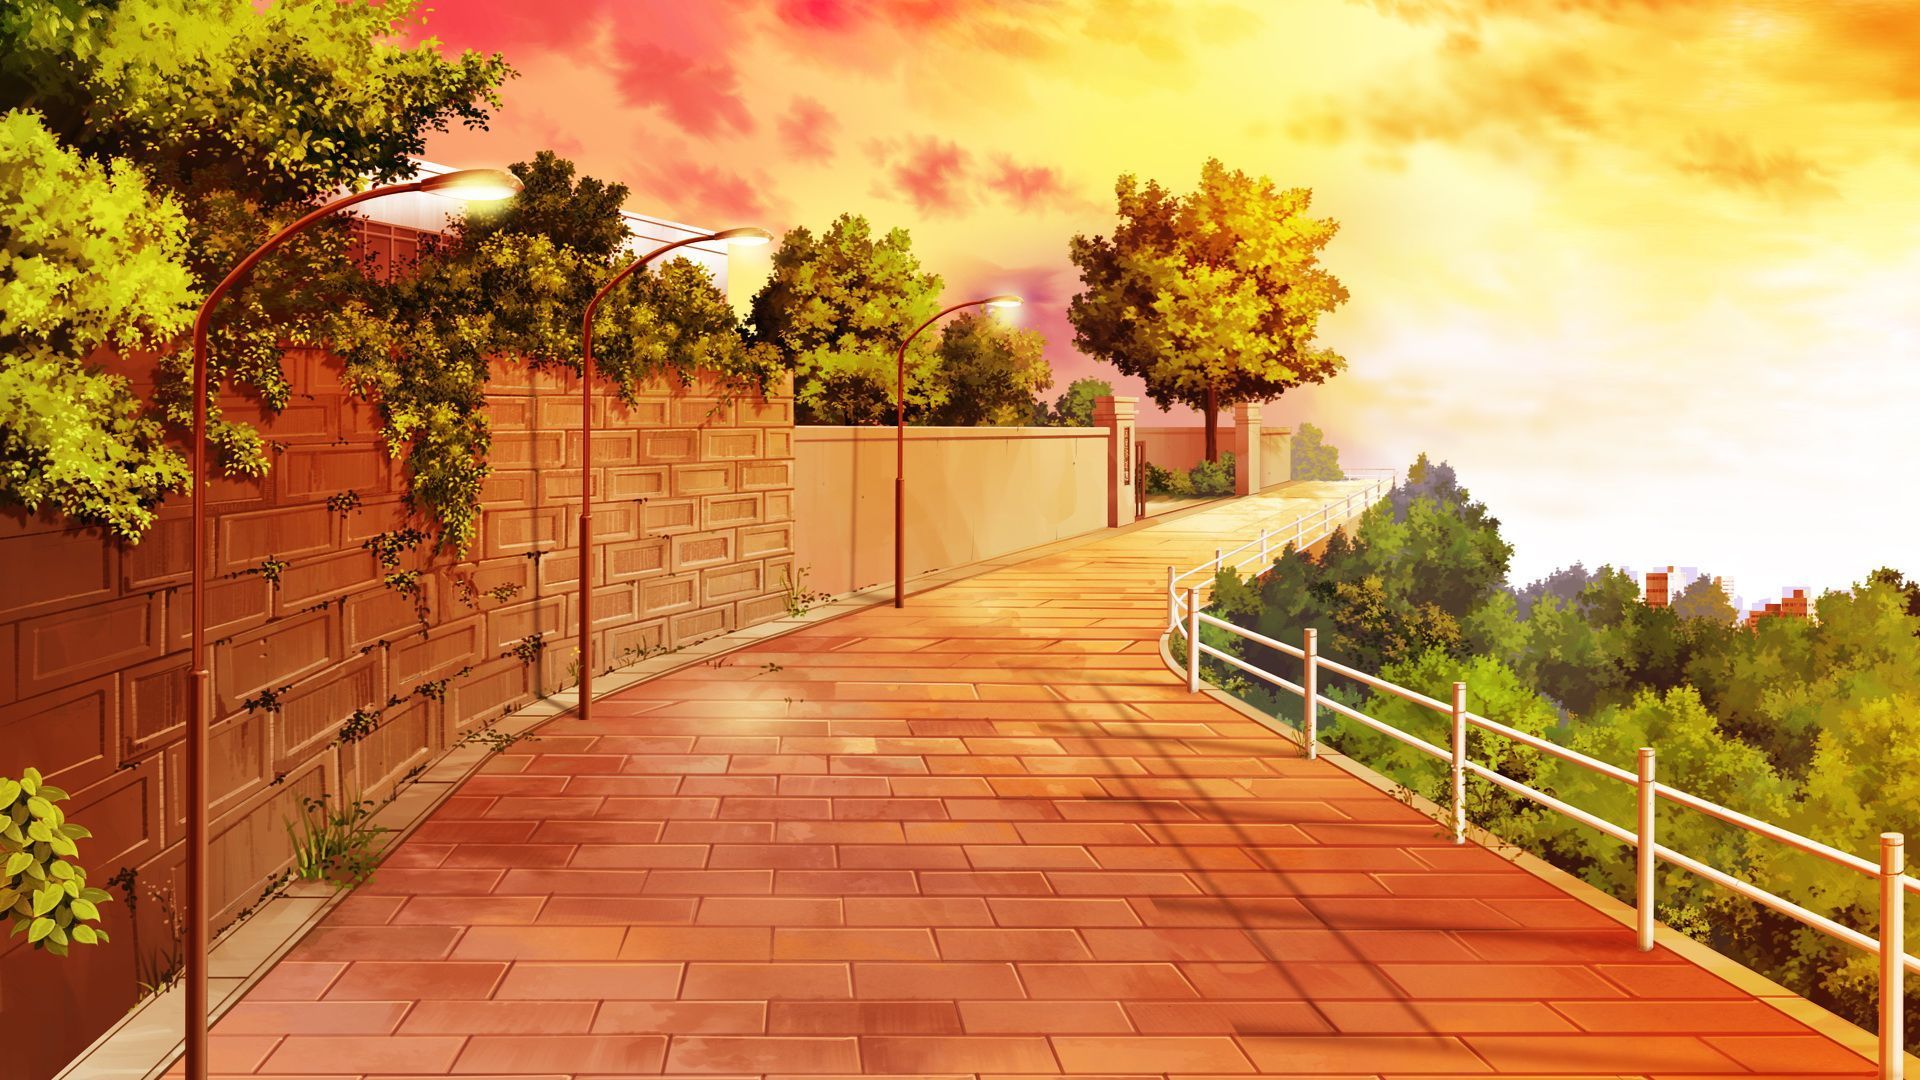 45+] Anime Fall Wallpapers - WallpaperSafari